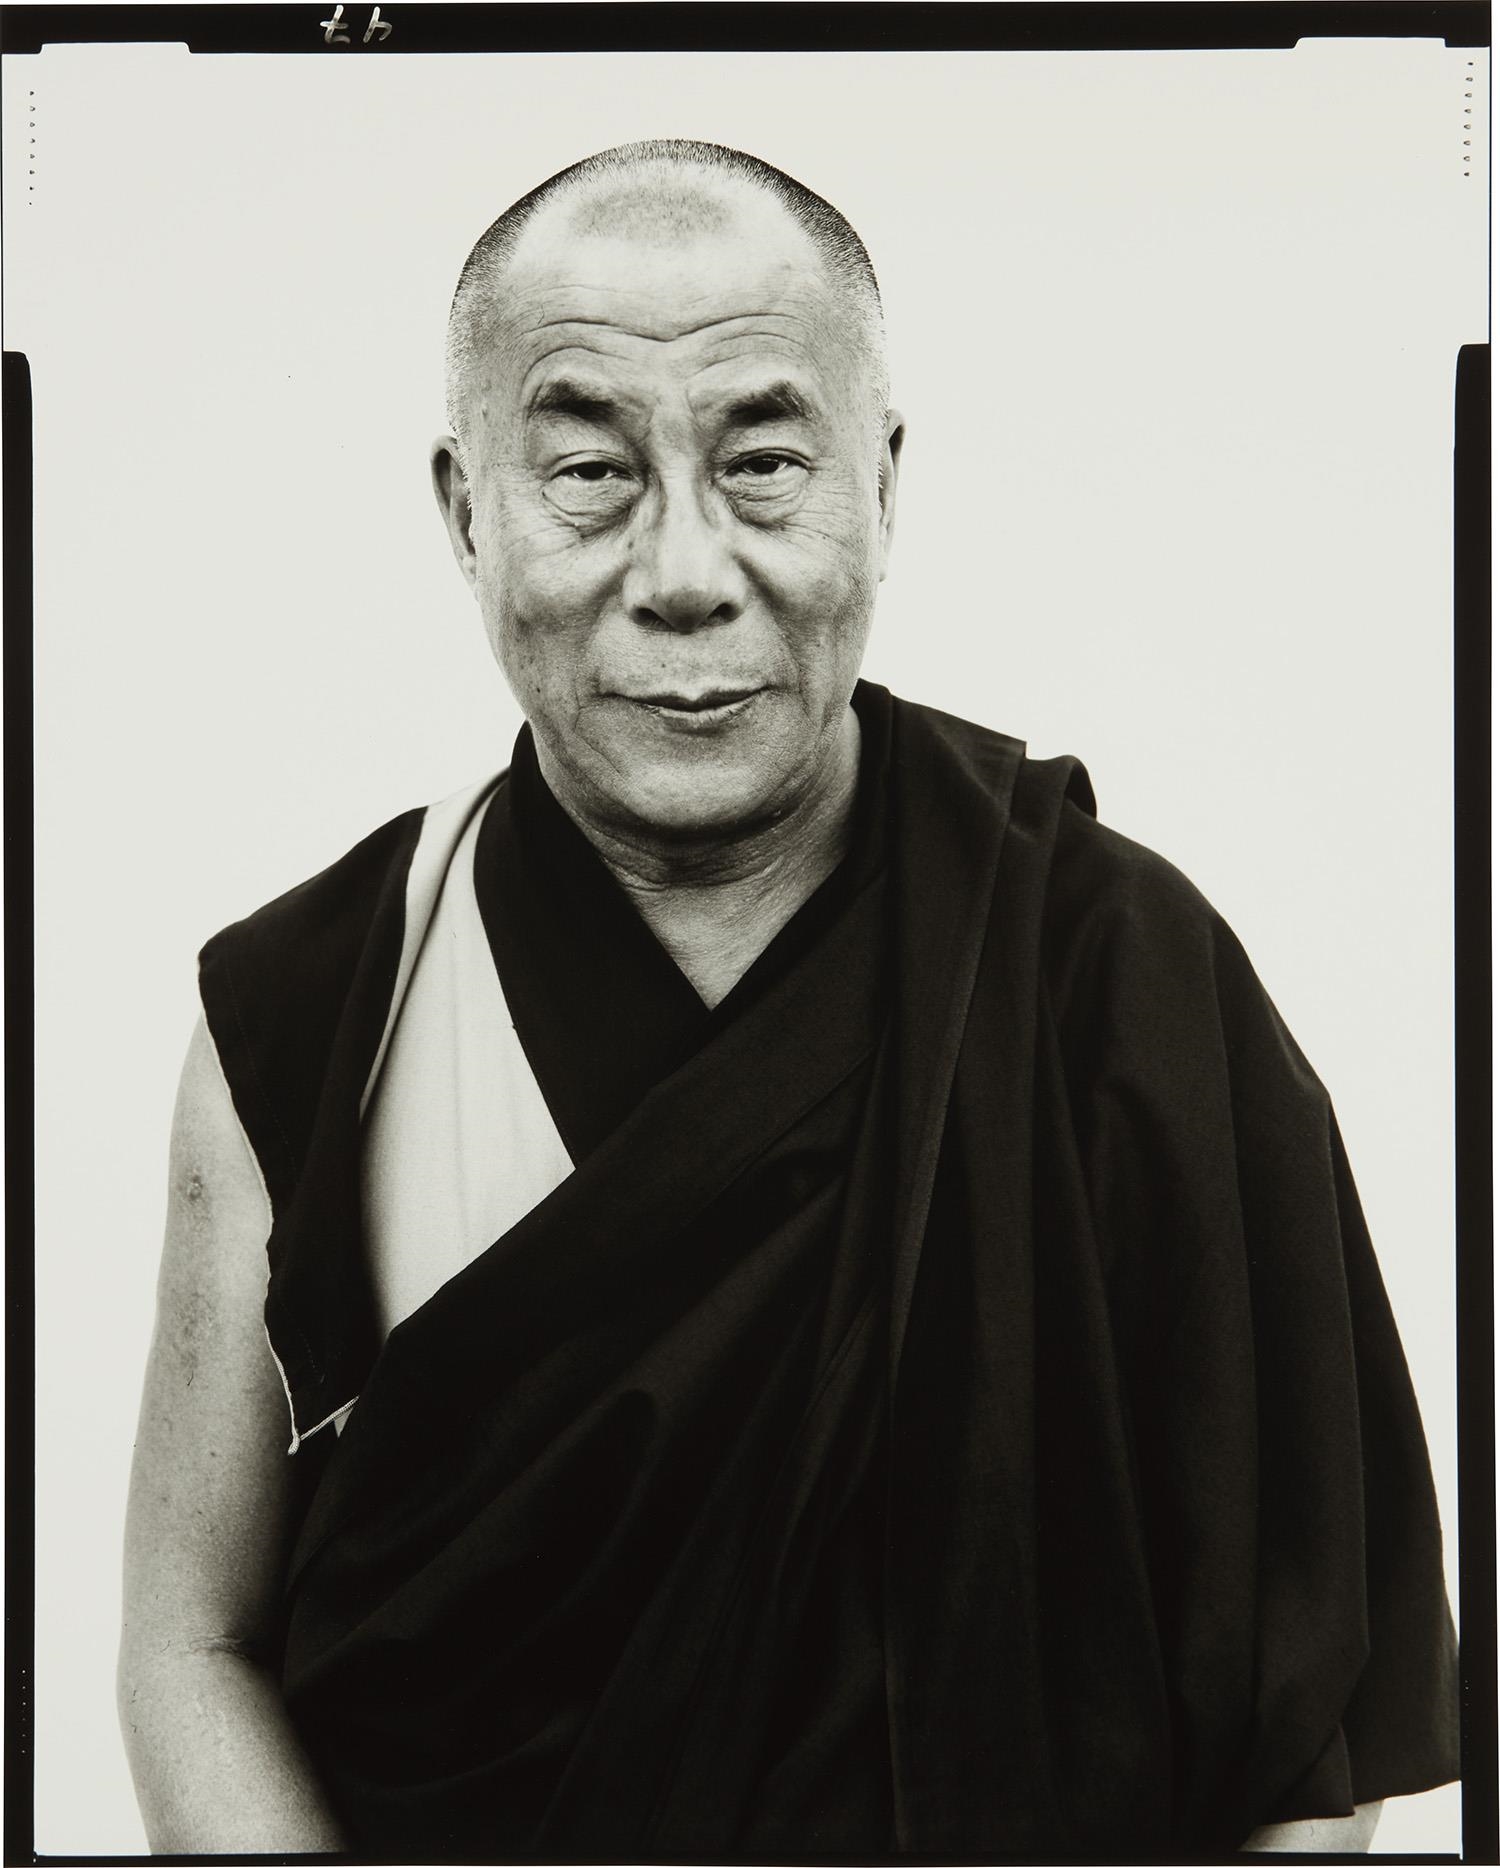 His Holiness The Dalai Lama, Kamataka, India, January by Richard Avedon, 1998